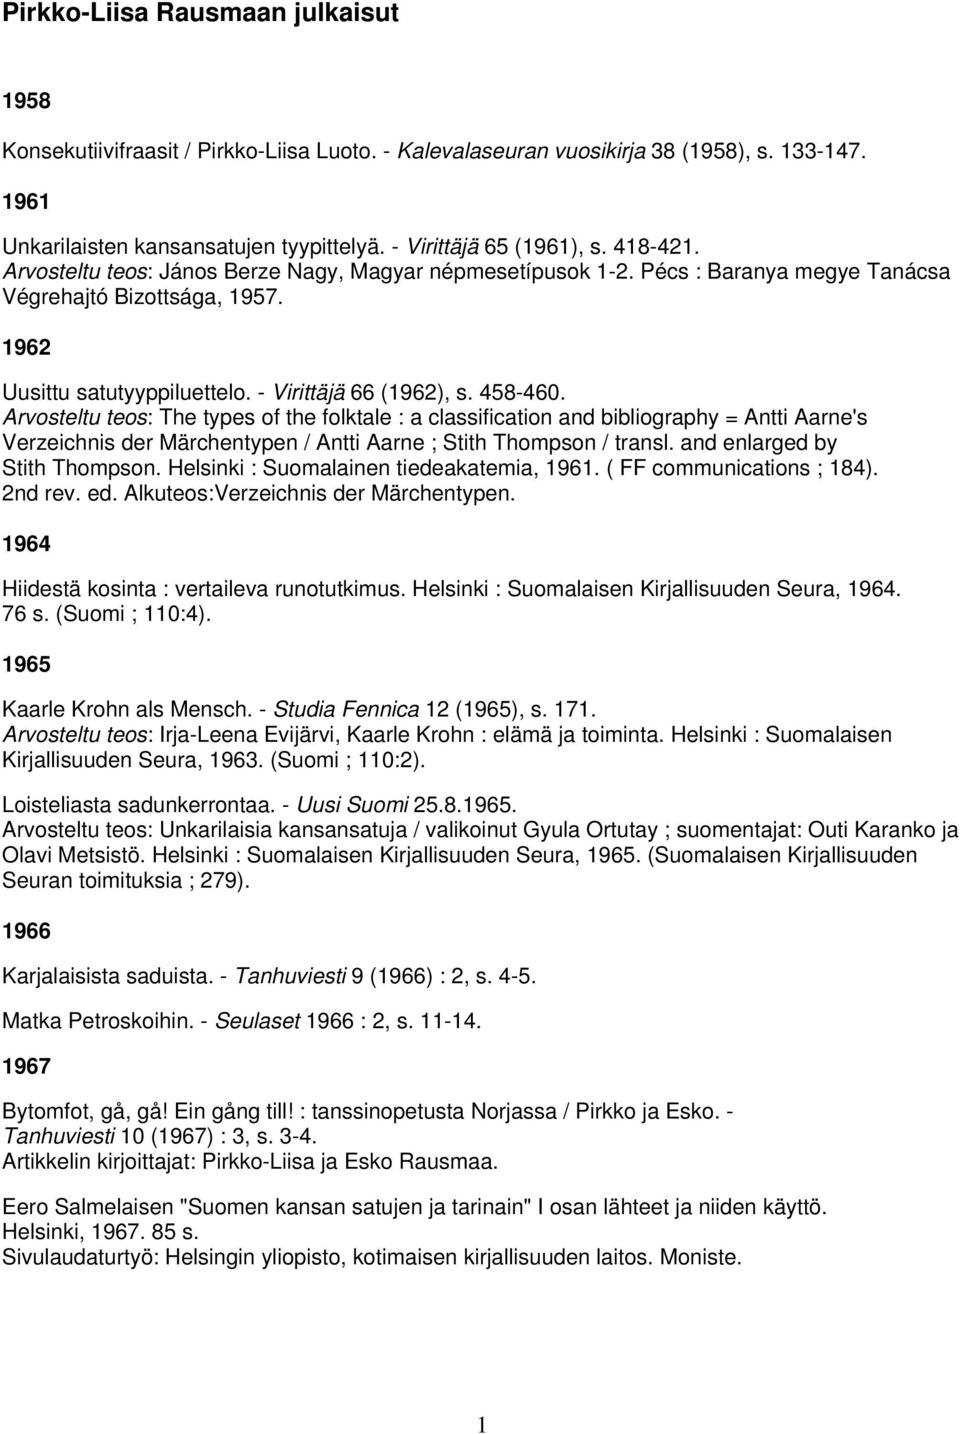 - Virittäjä 66 (1962), s. 458-460. Arvosteltu teos: The types of the folktale : a classification and bibliography = Antti Aarne's Verzeichnis der Märchentypen / Antti Aarne ; Stith Thompson / transl.